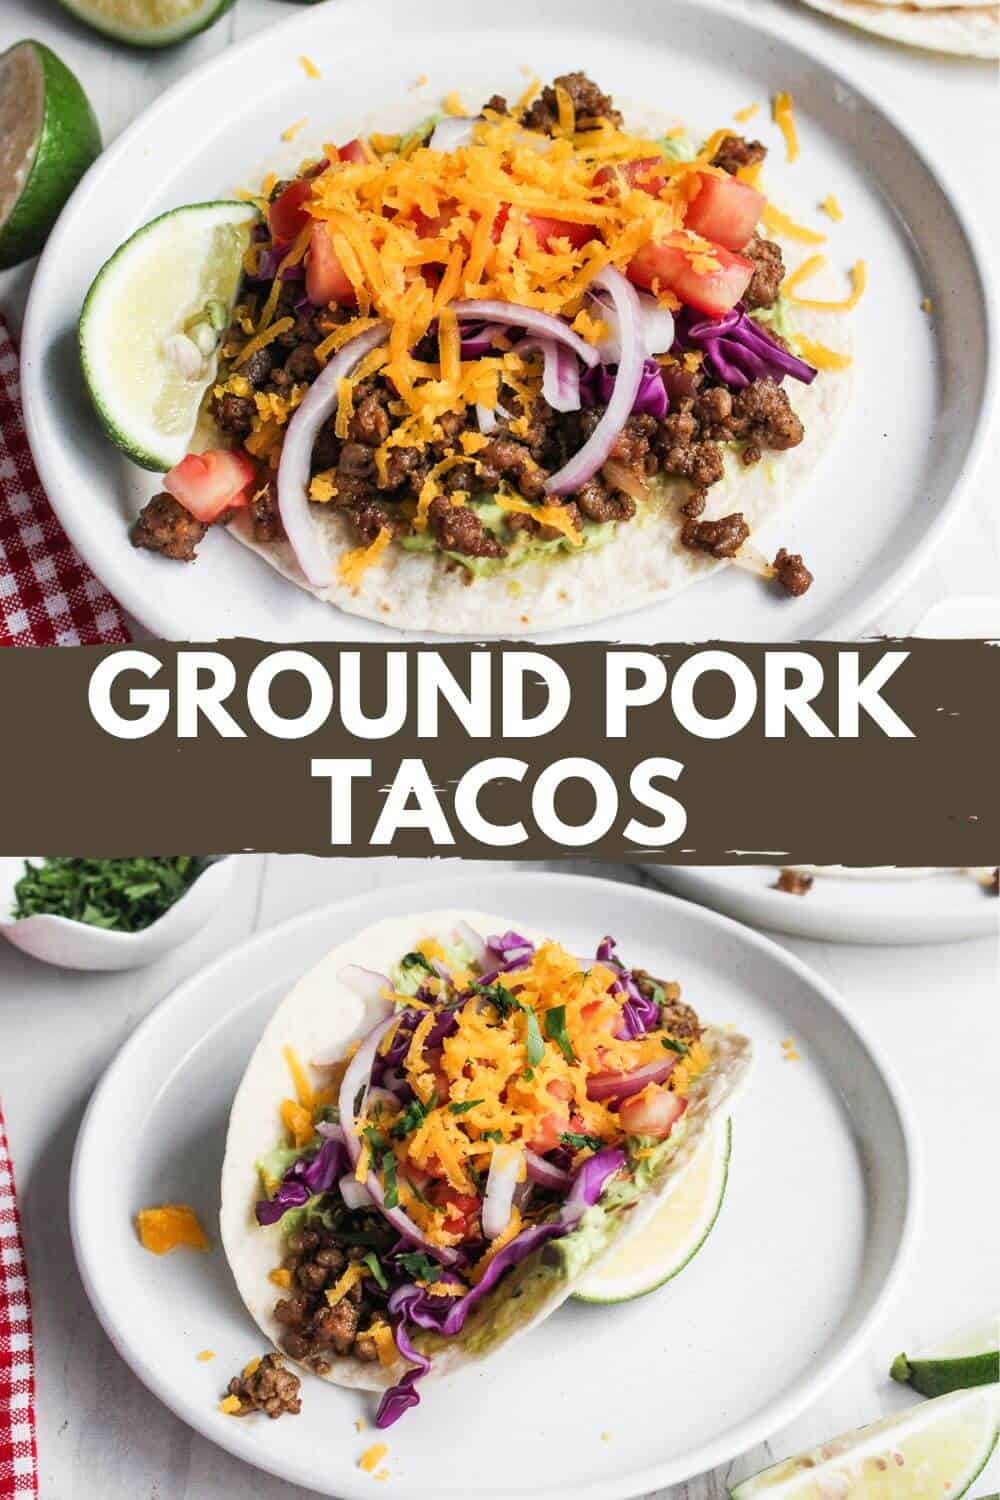 Ground pork tacos served on white plates.